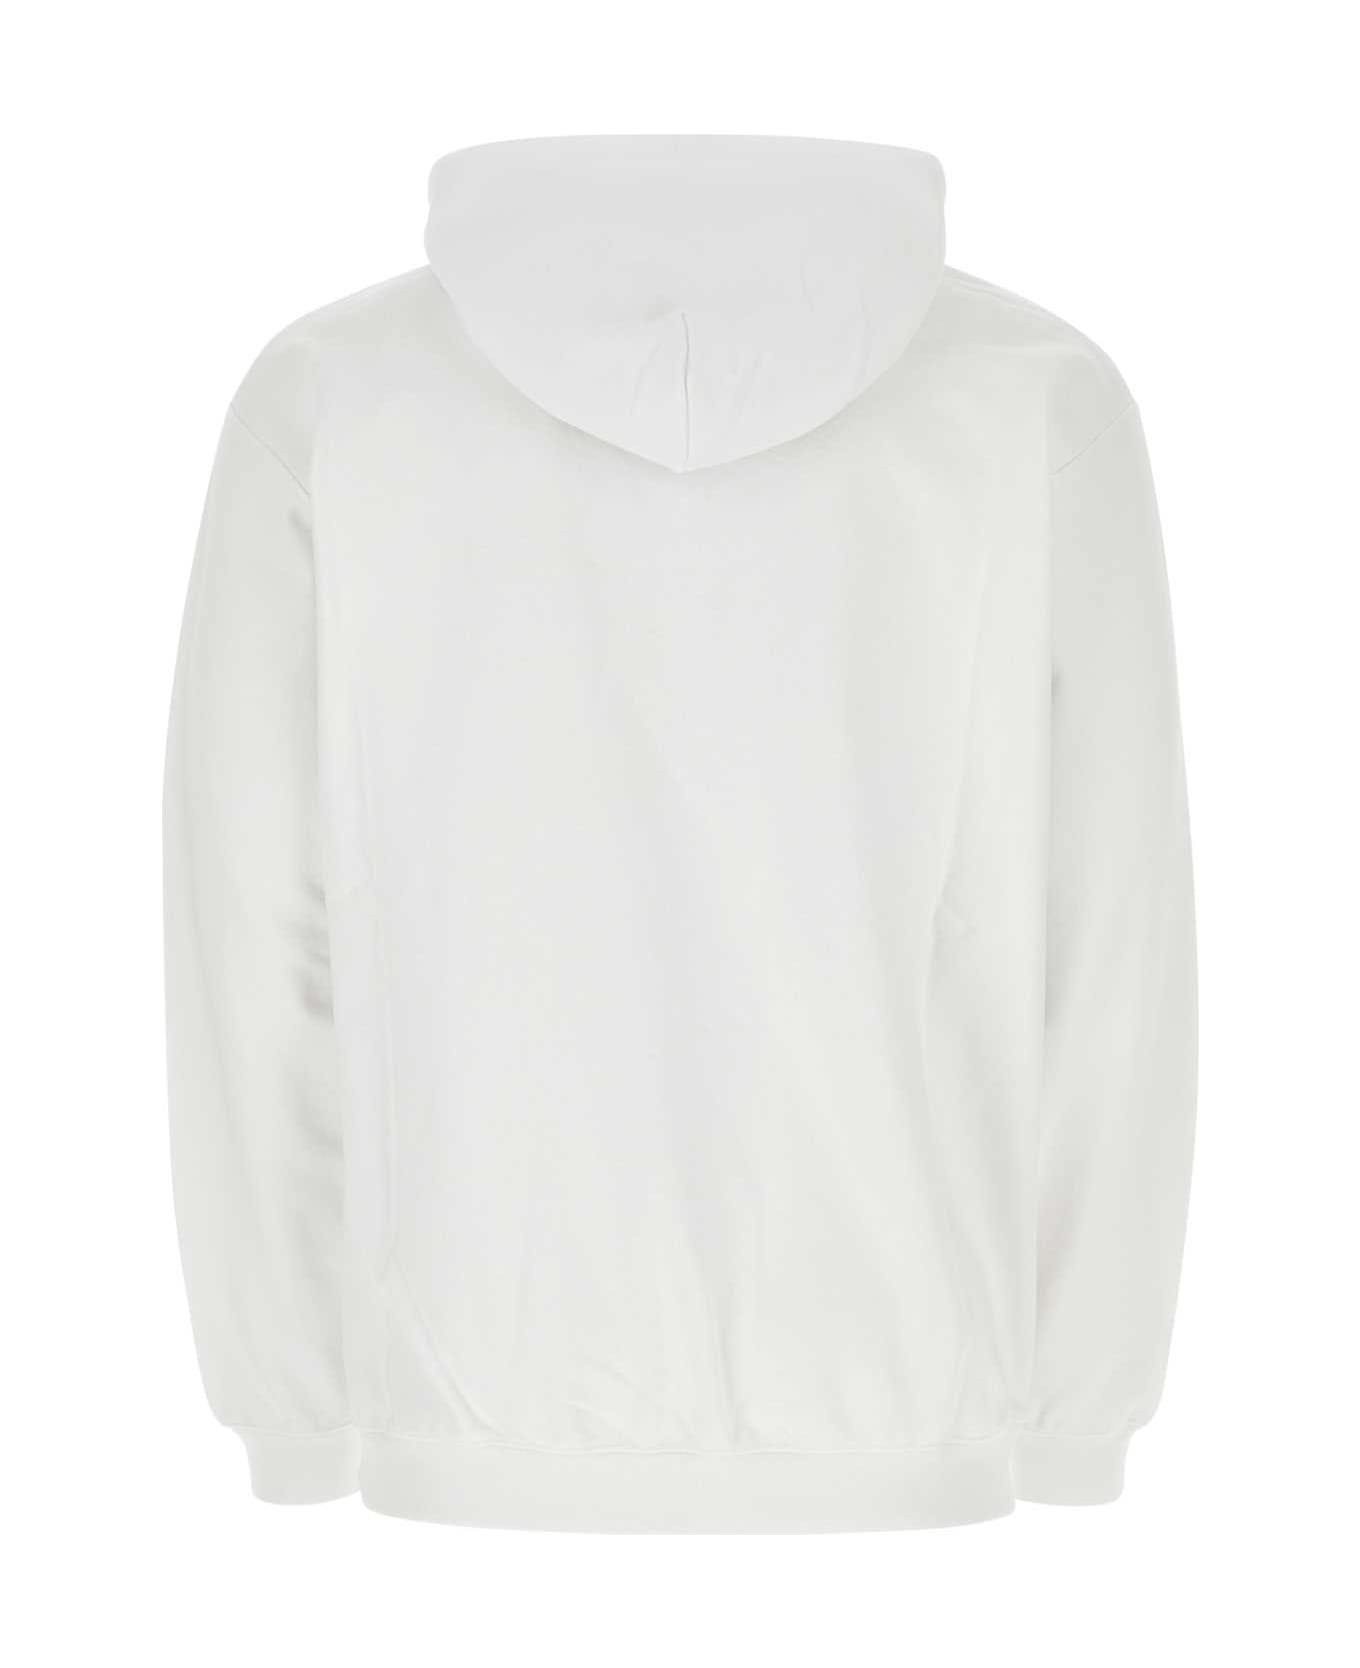 VTMNTS White Cotton Blend Oversize Sweatshirt - WHITE / BLACK